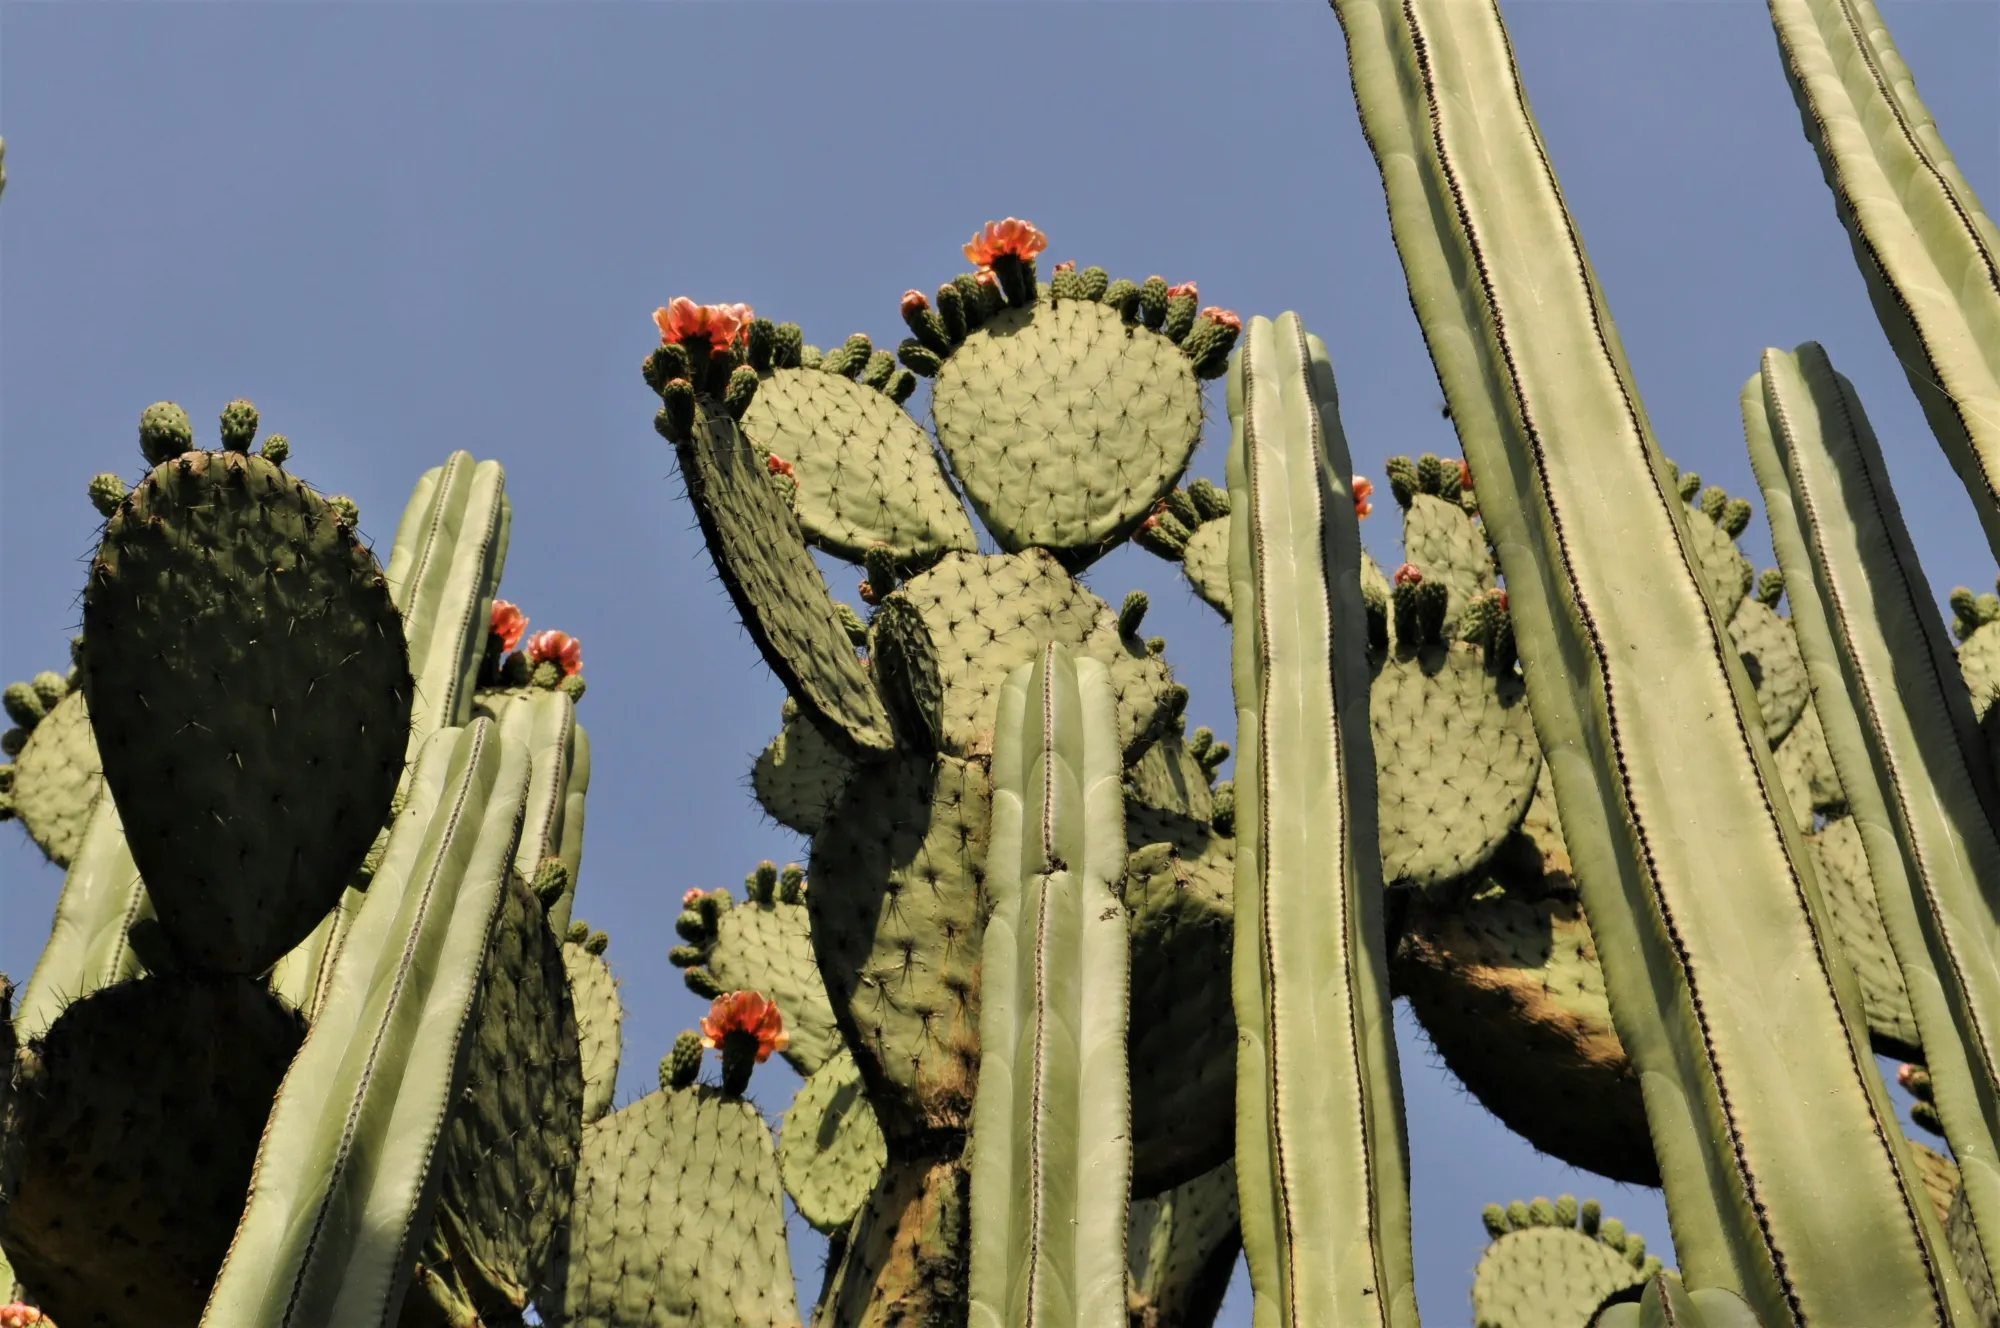 Cacti in Oaxaca City